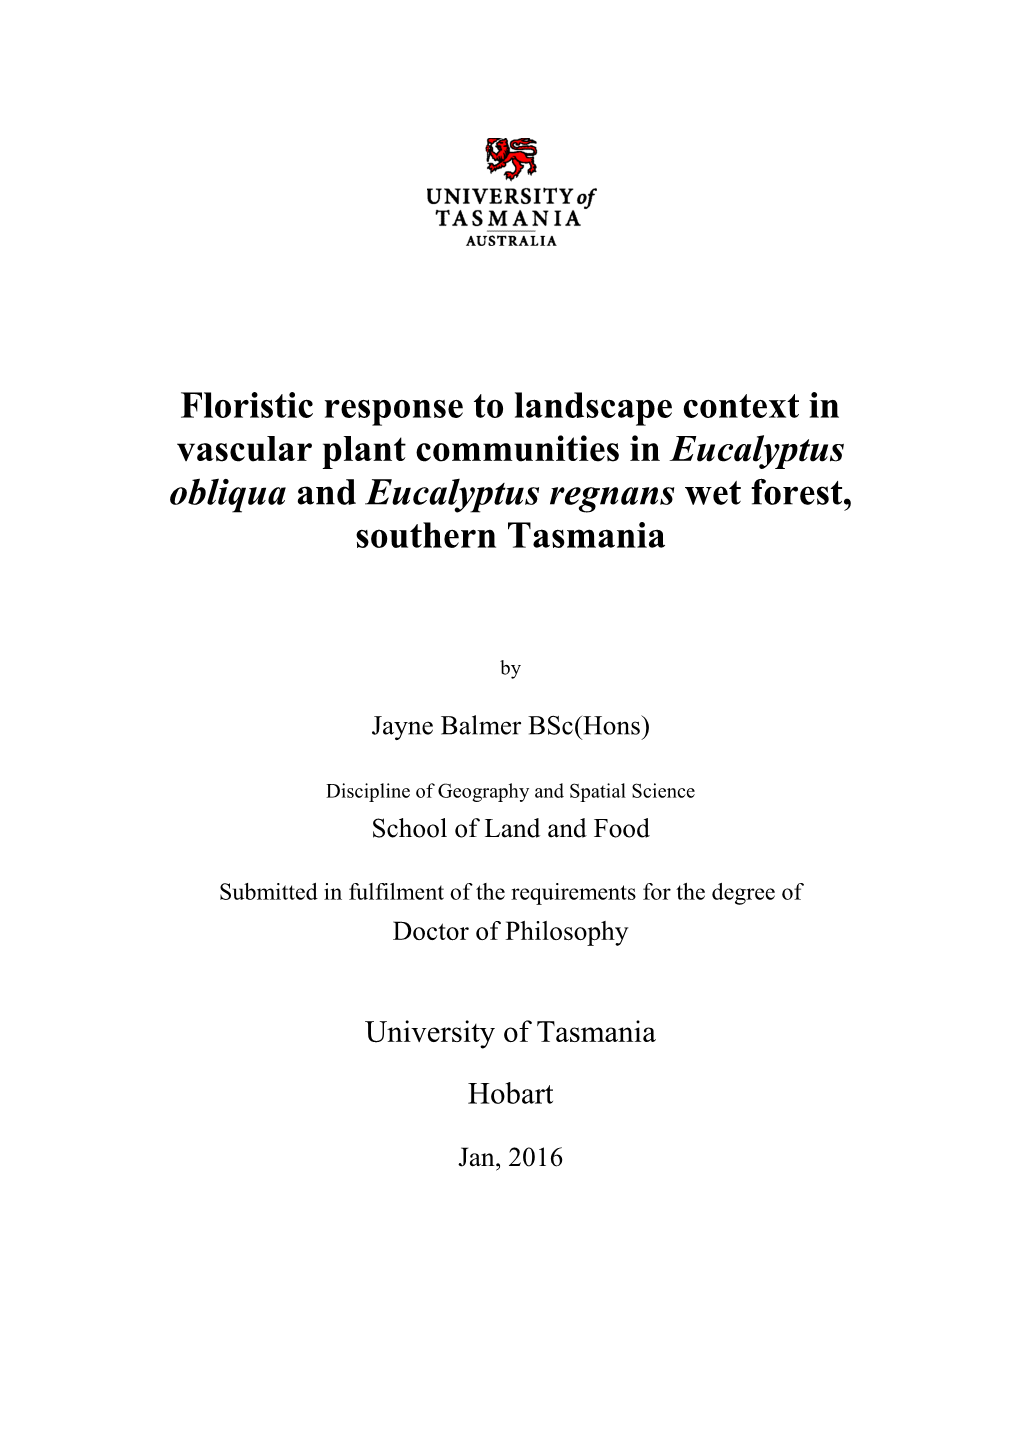 Floristic Response to Landscape Context in Vascular Plant Communities in Eucalyptus Obliqua and Eucalyptus Regnans Wet Forest, Southern Tasmania